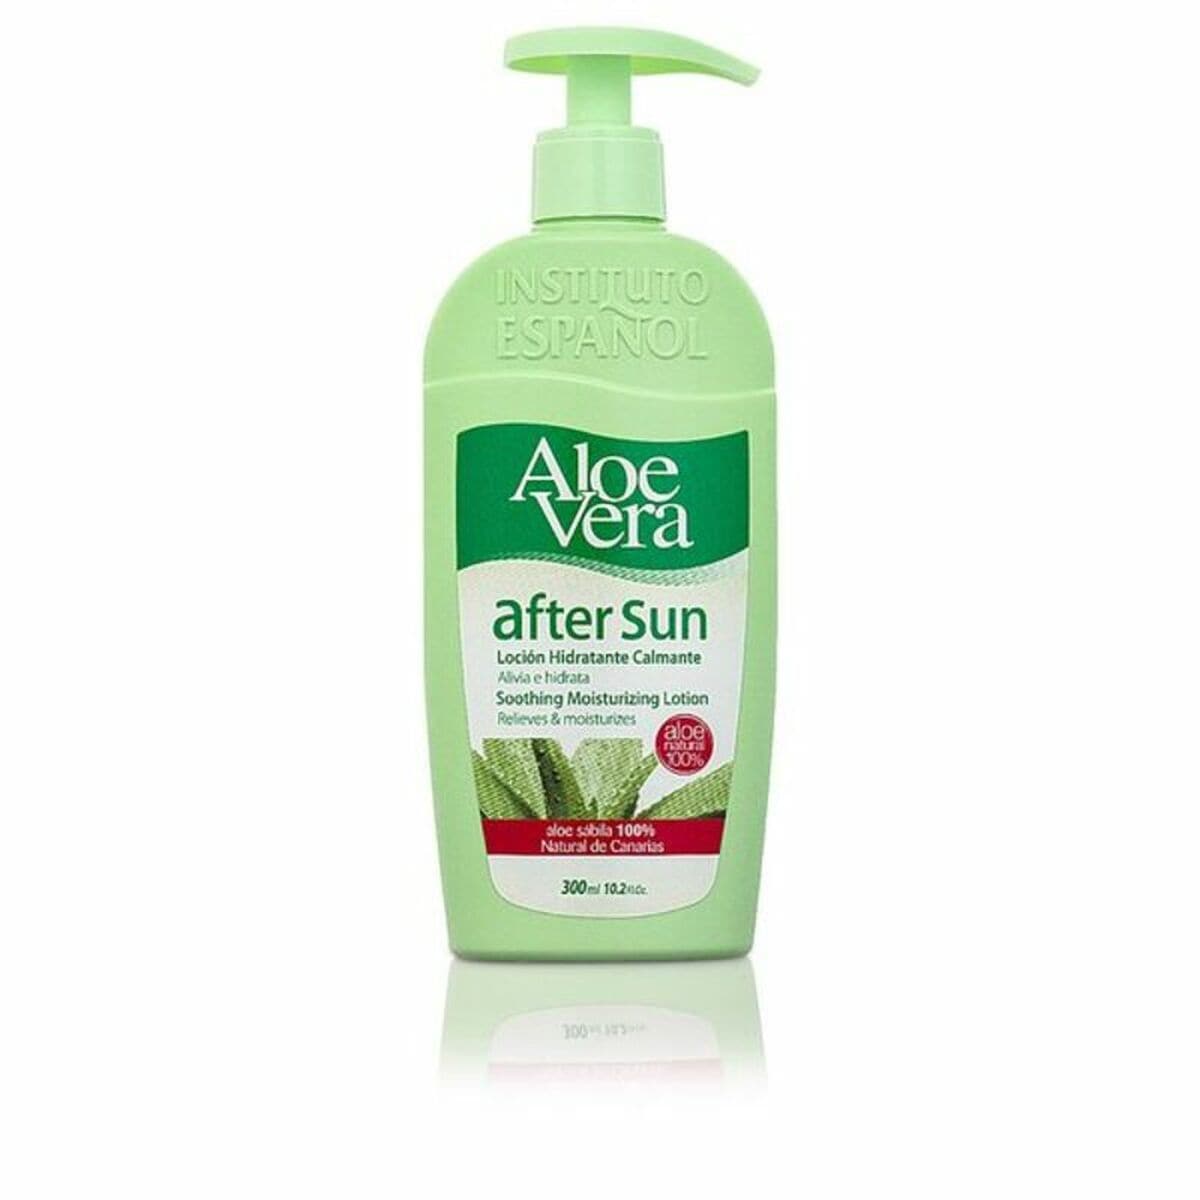 After Sun Aloe Vera Instituto Español (Unisex) (300 ml)-0